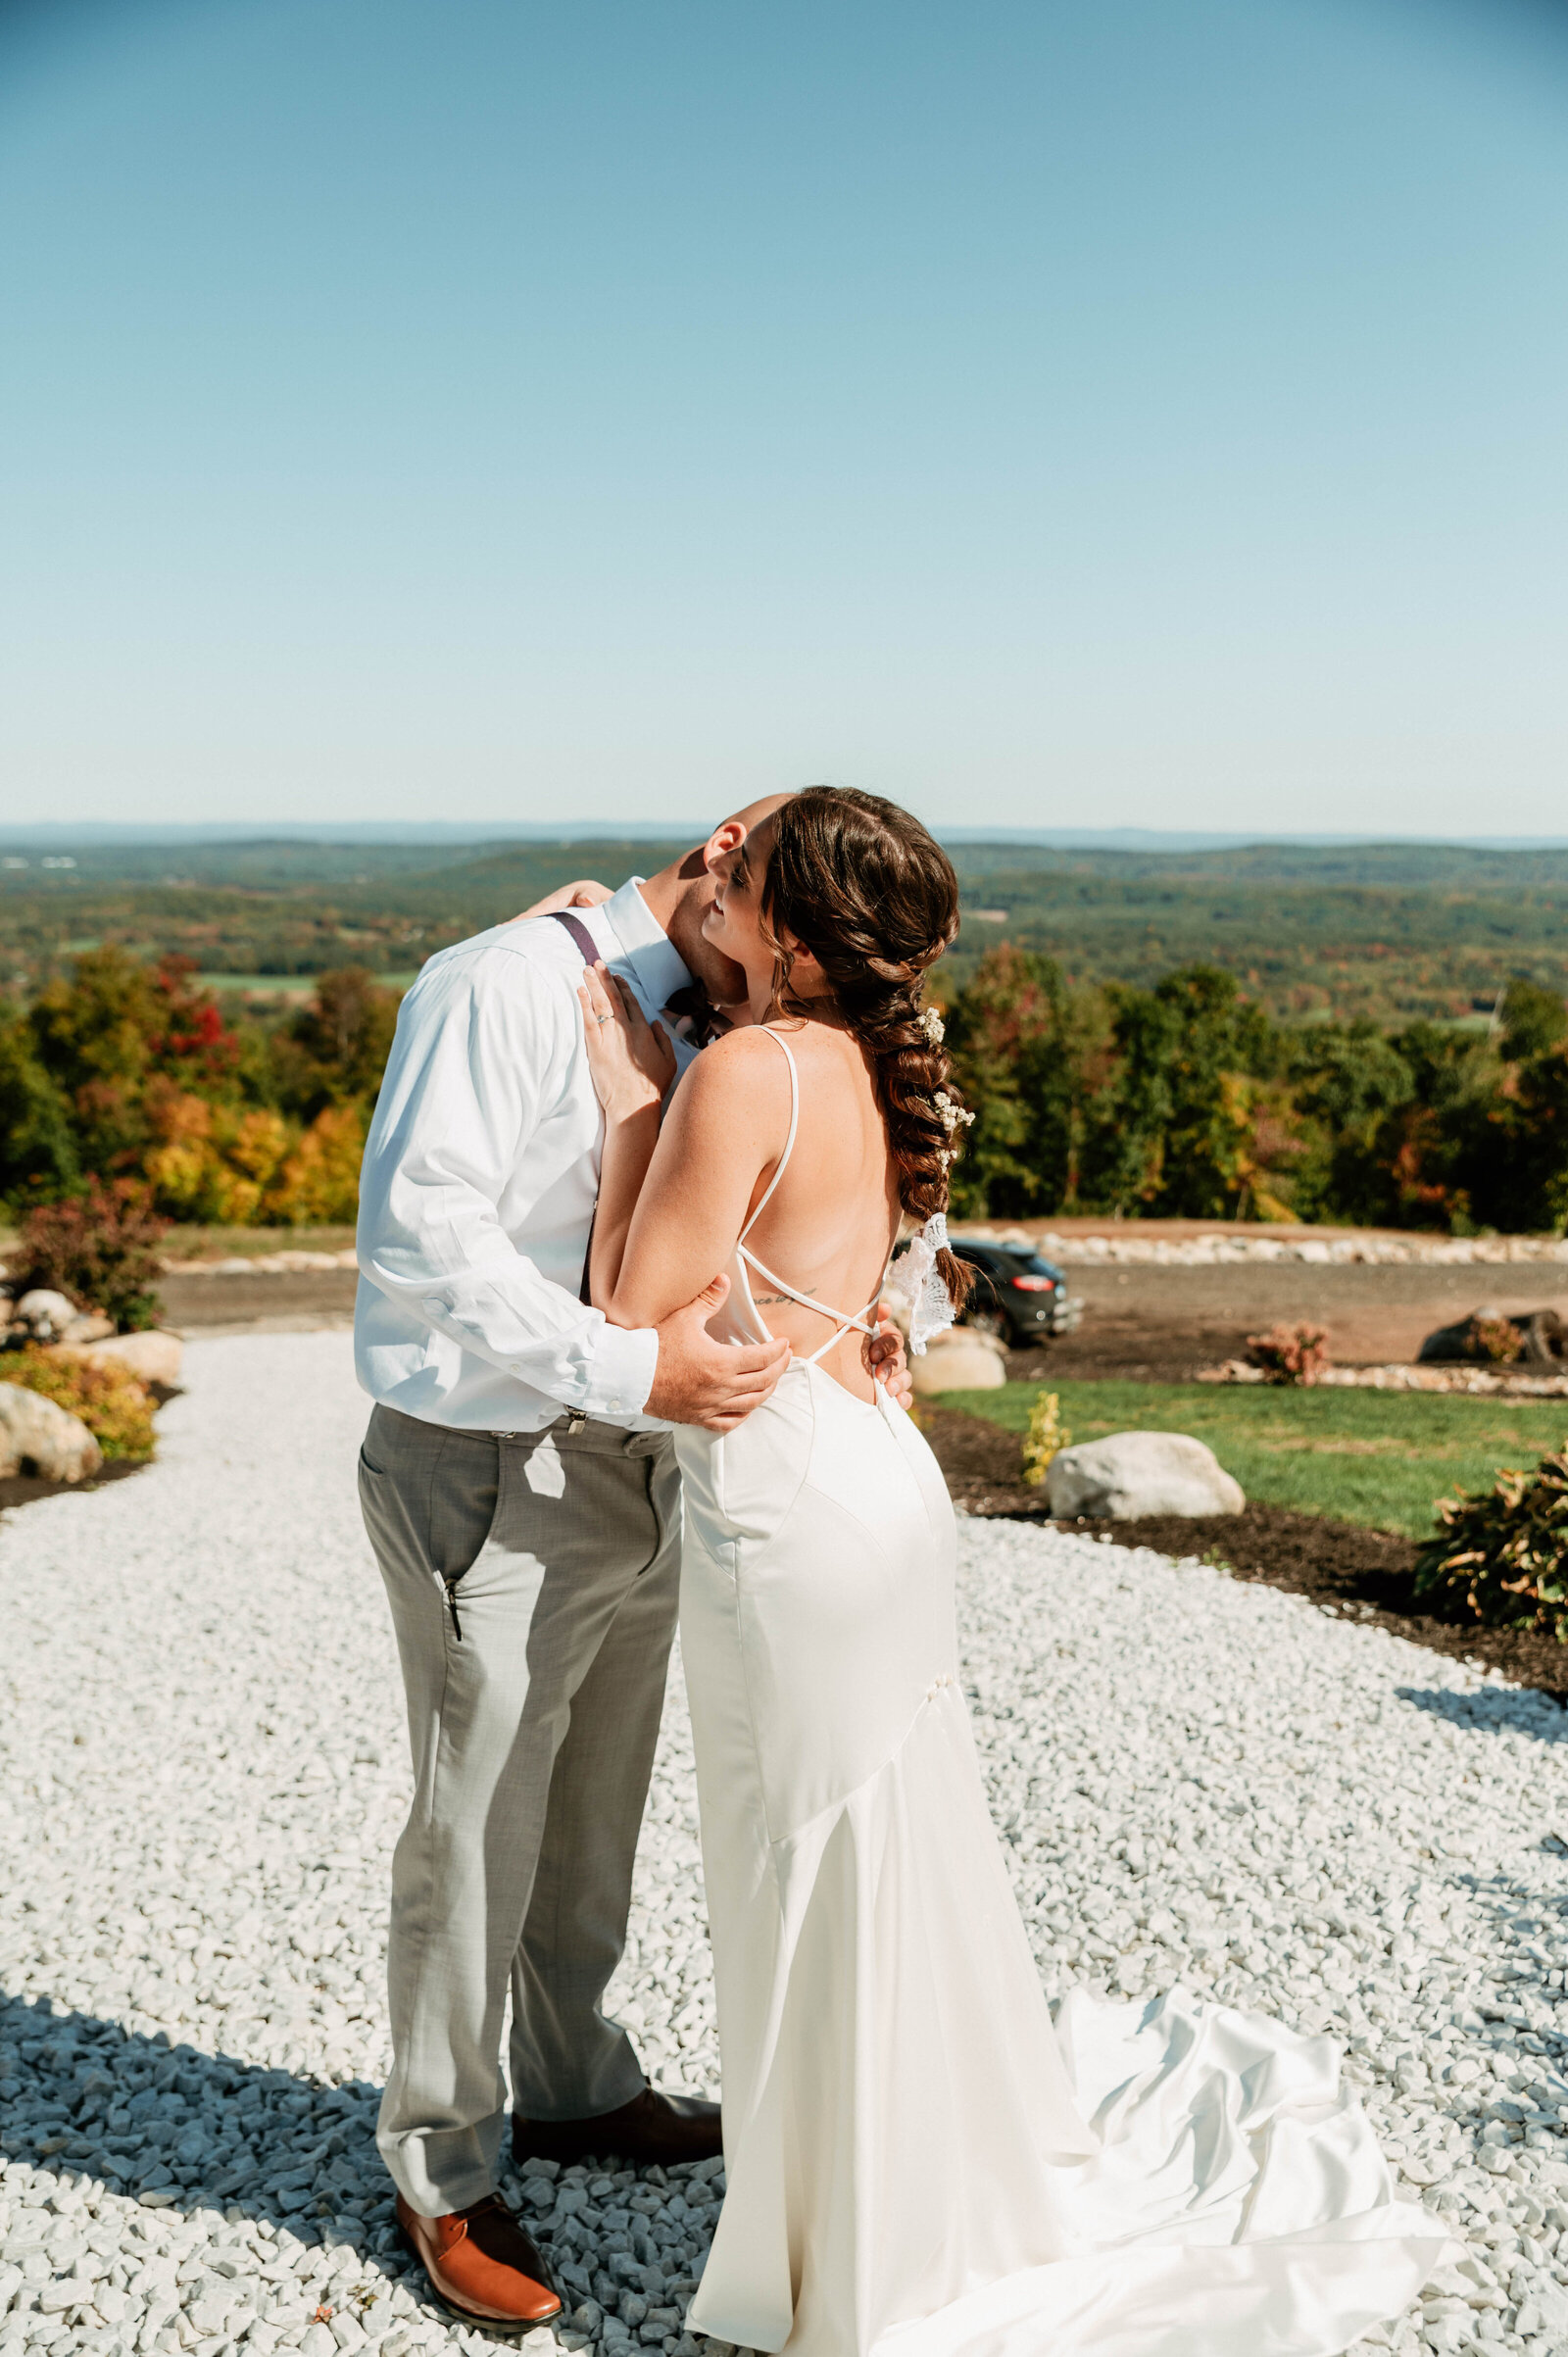 Haley Rome Photo | Fall Backyard Wedding CT-7886